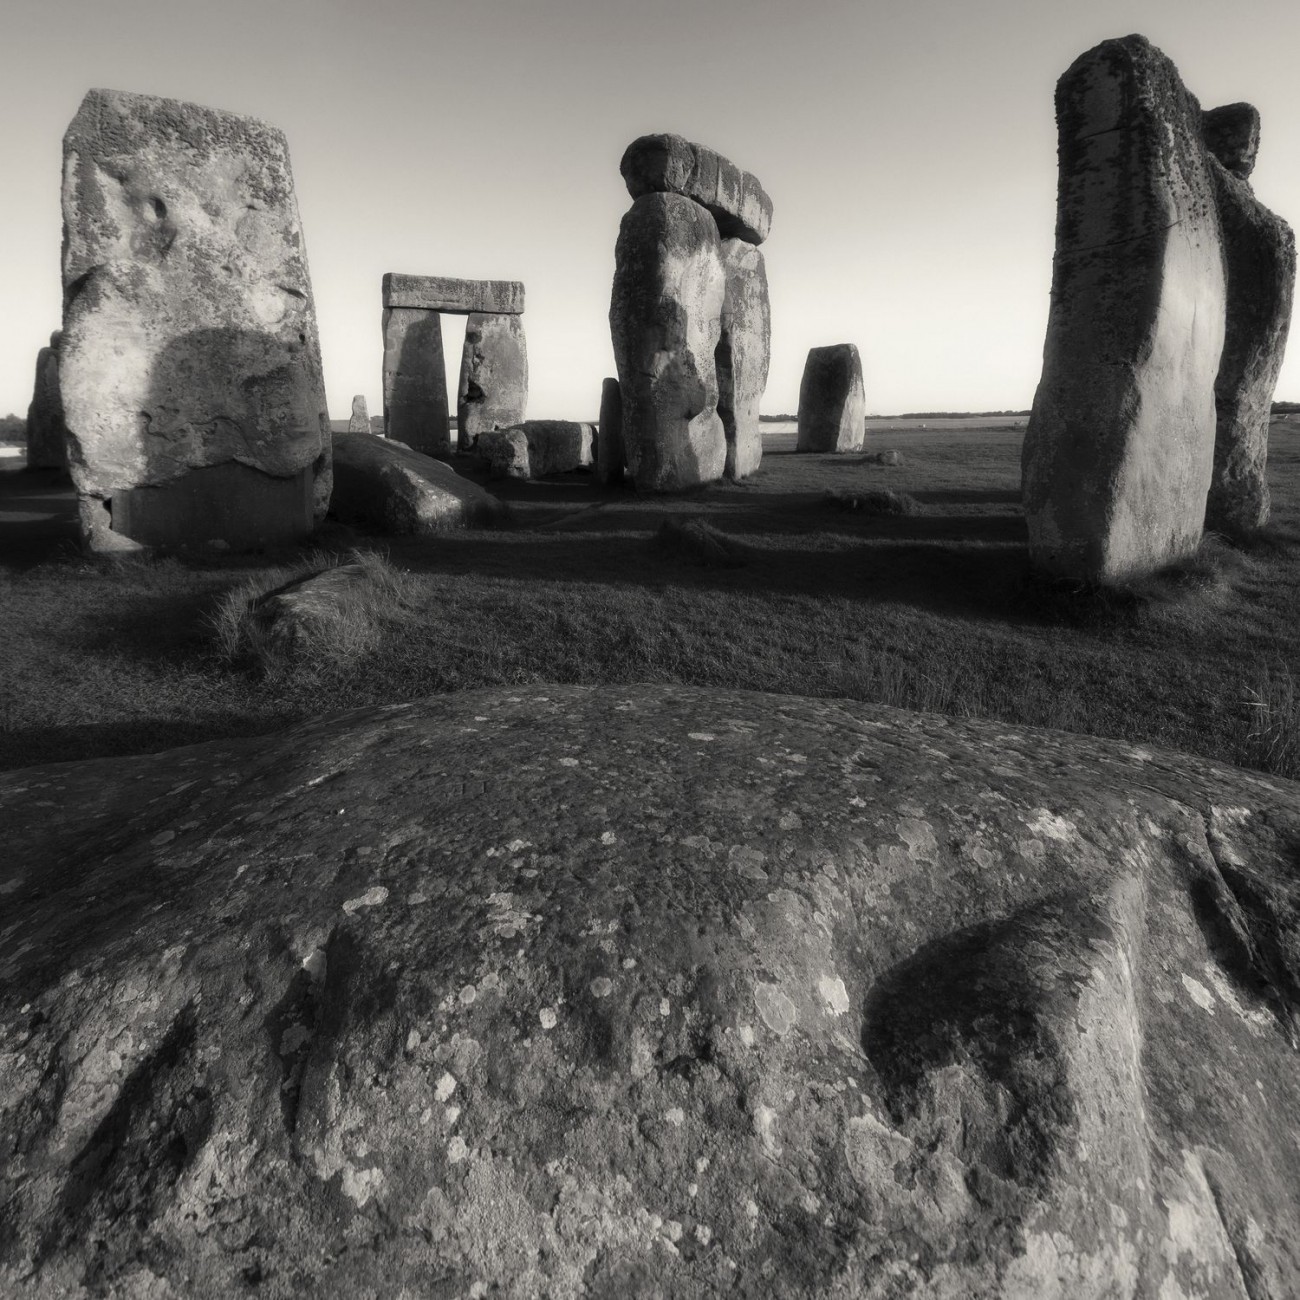 Monolith study 4, Stonehenge, England, 2012